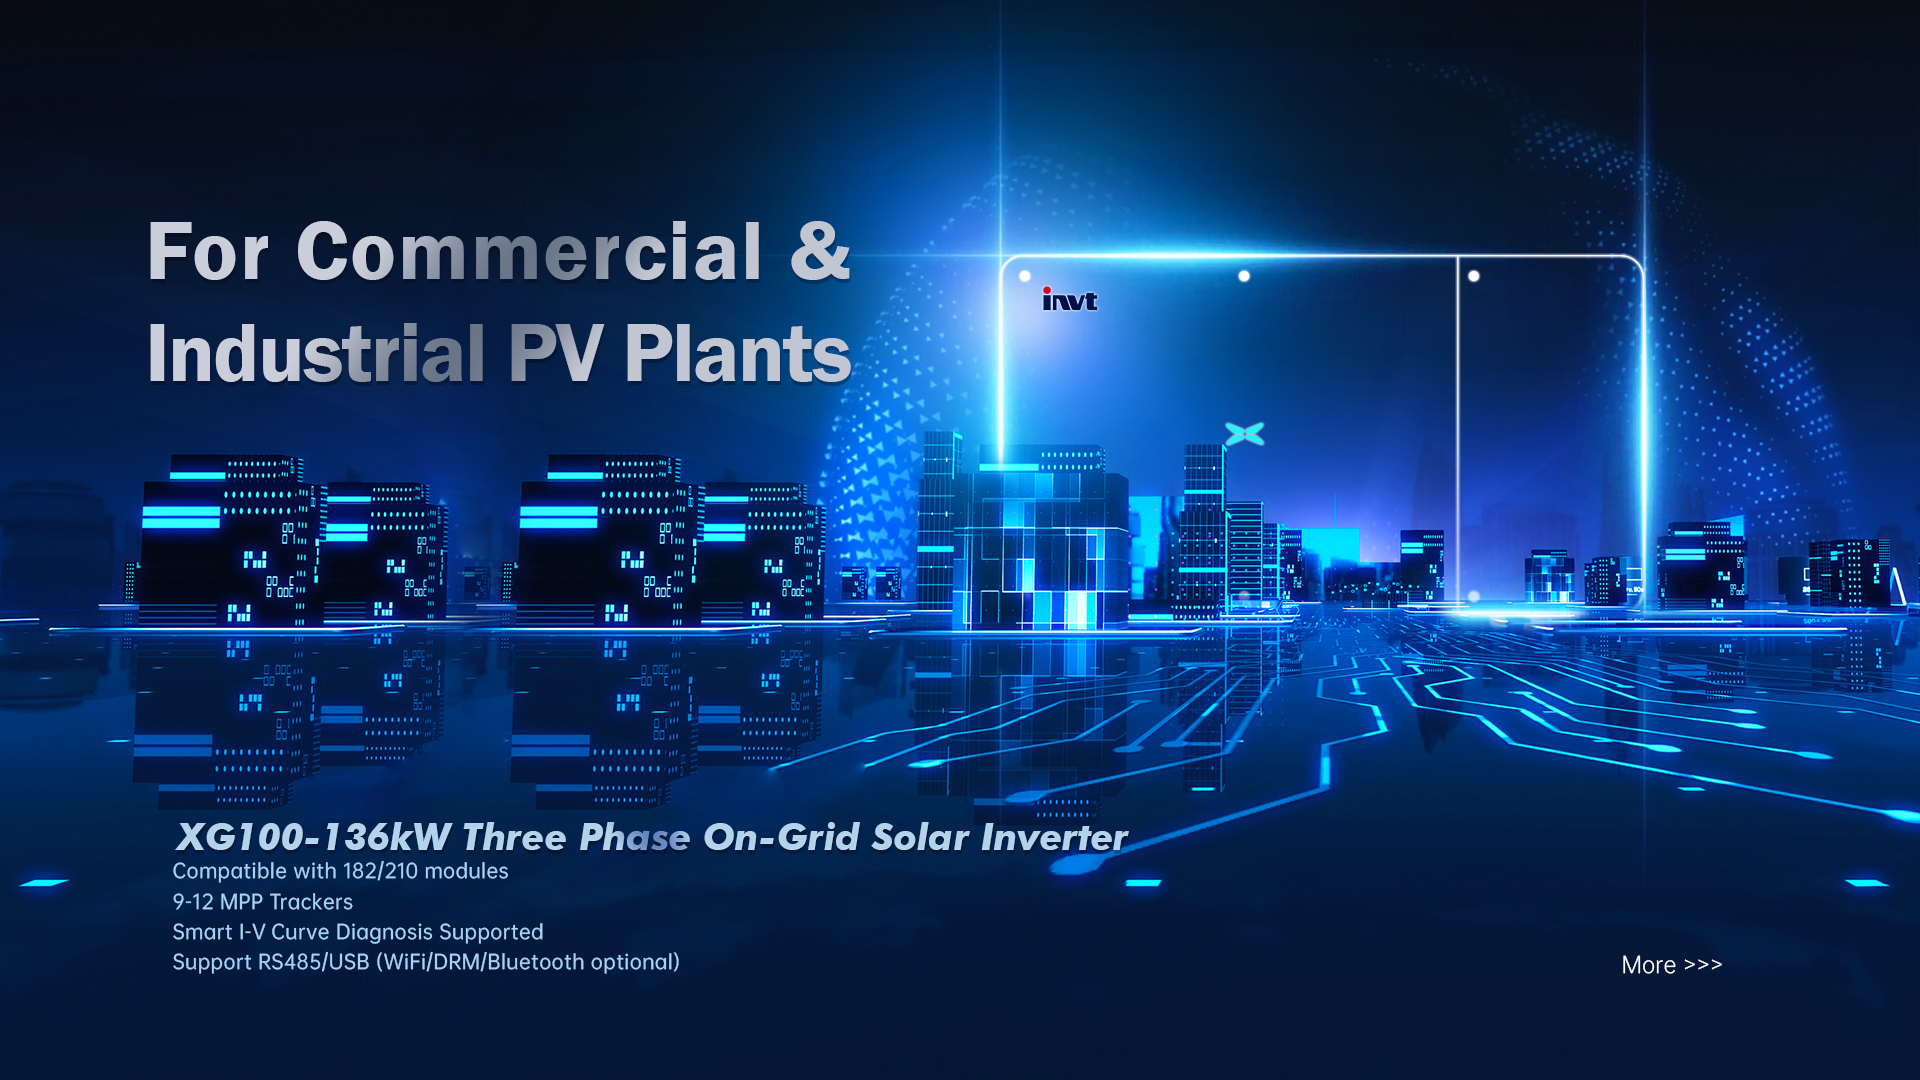 Solar, PV plant, solar inverters, On-grid, three phase